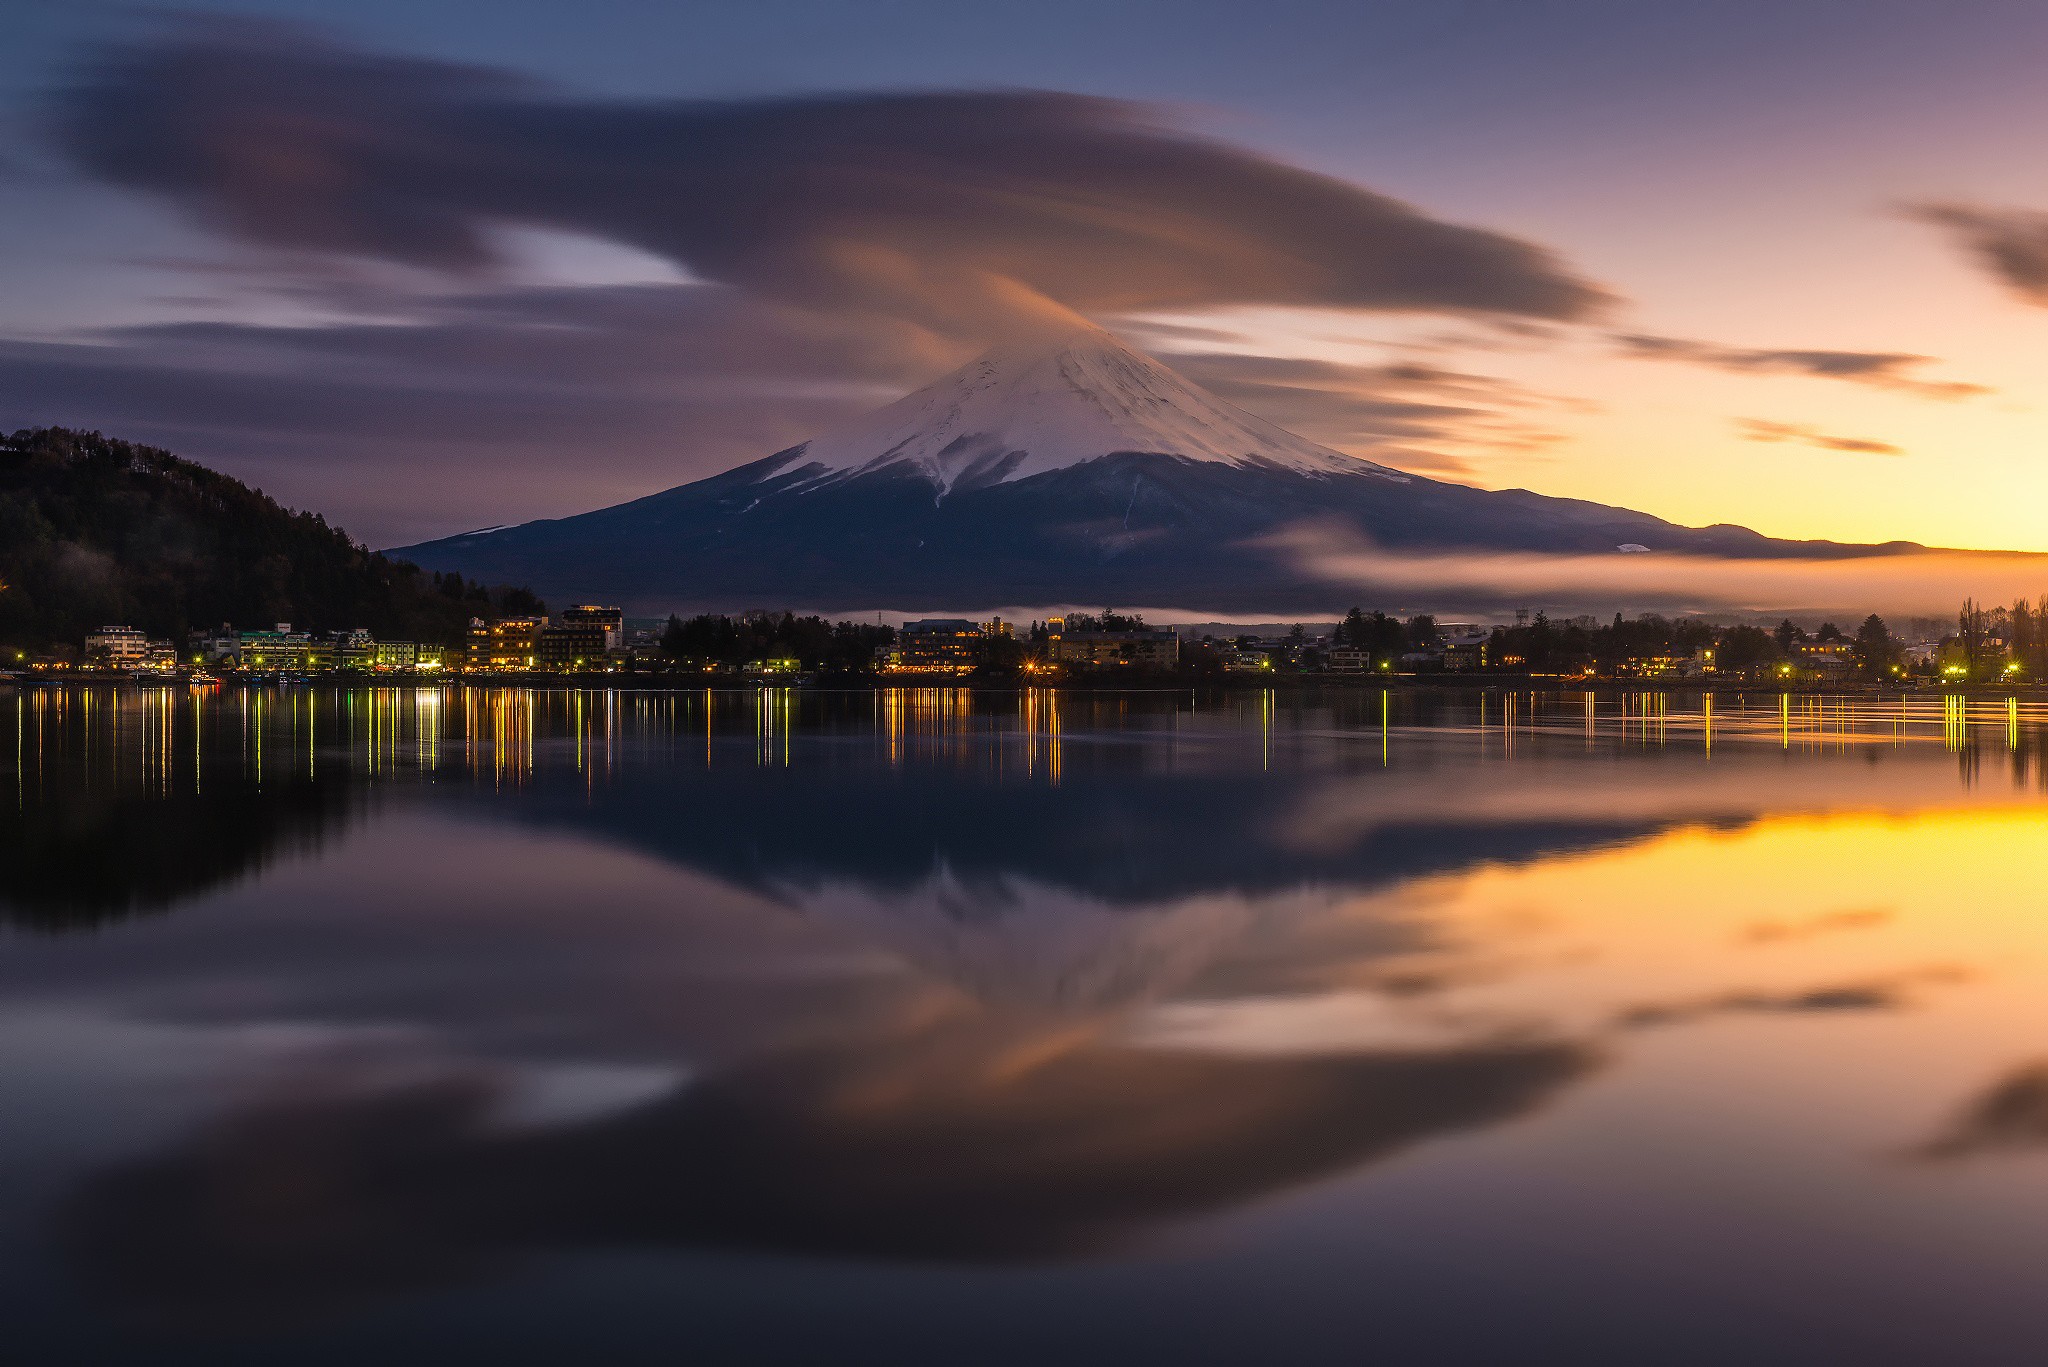 General 2048x1367 photography Mount Fuji sunset Japan calm Asia volcano sunlight reflection lights city lights